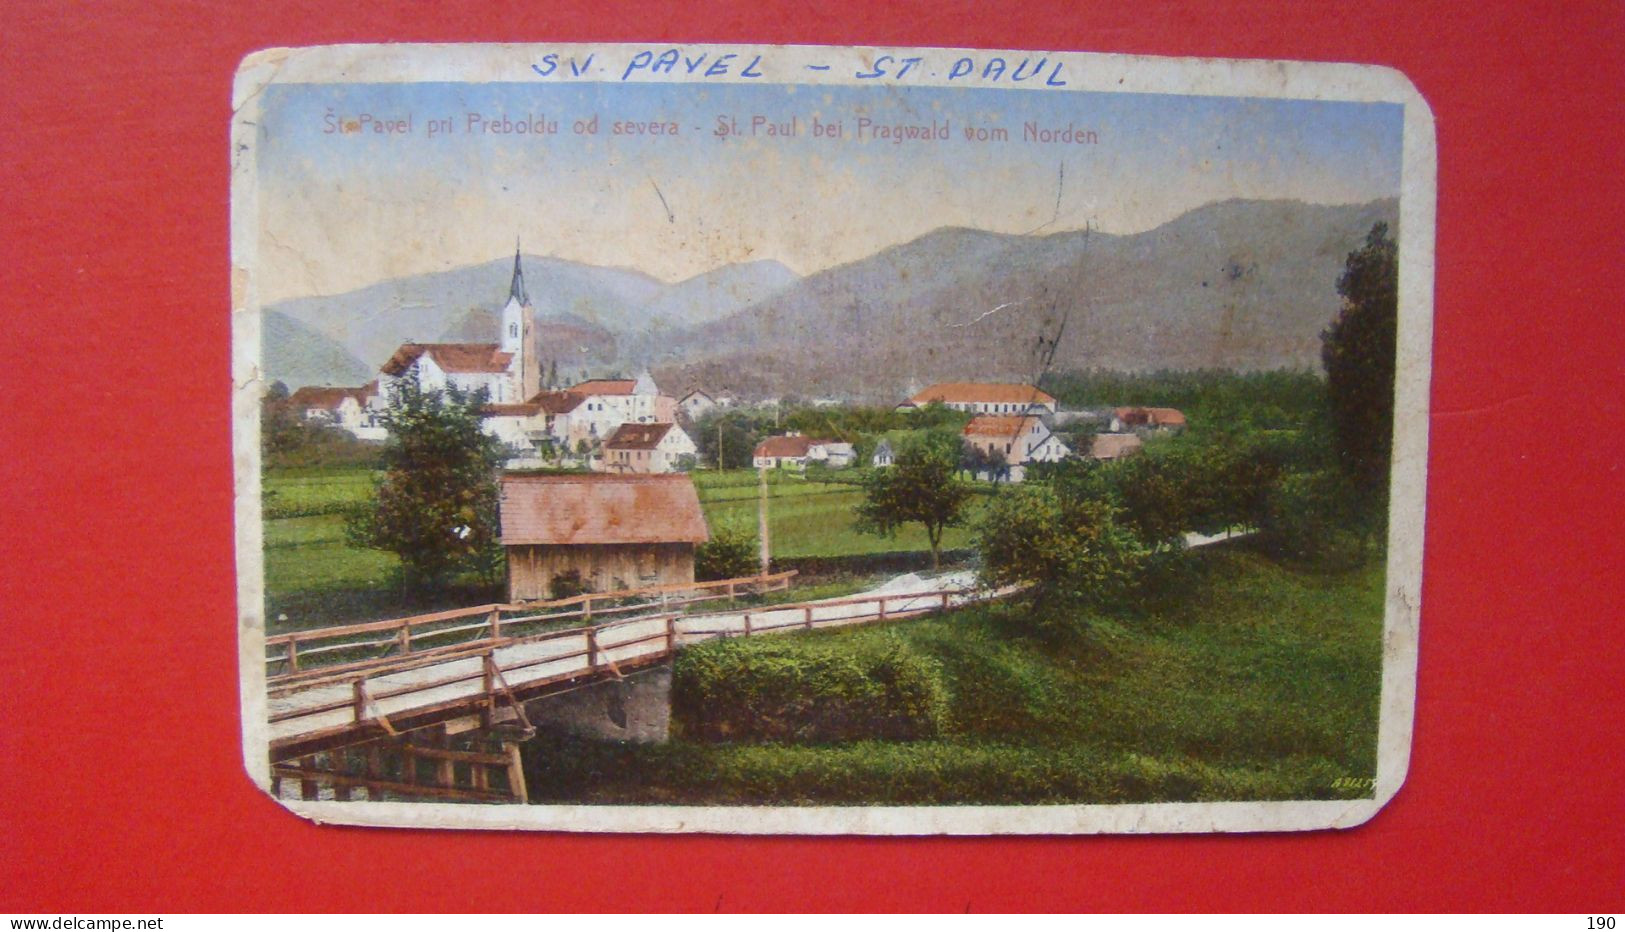 St.Pavel Pri Preboldu Od Severa. - Slowenien